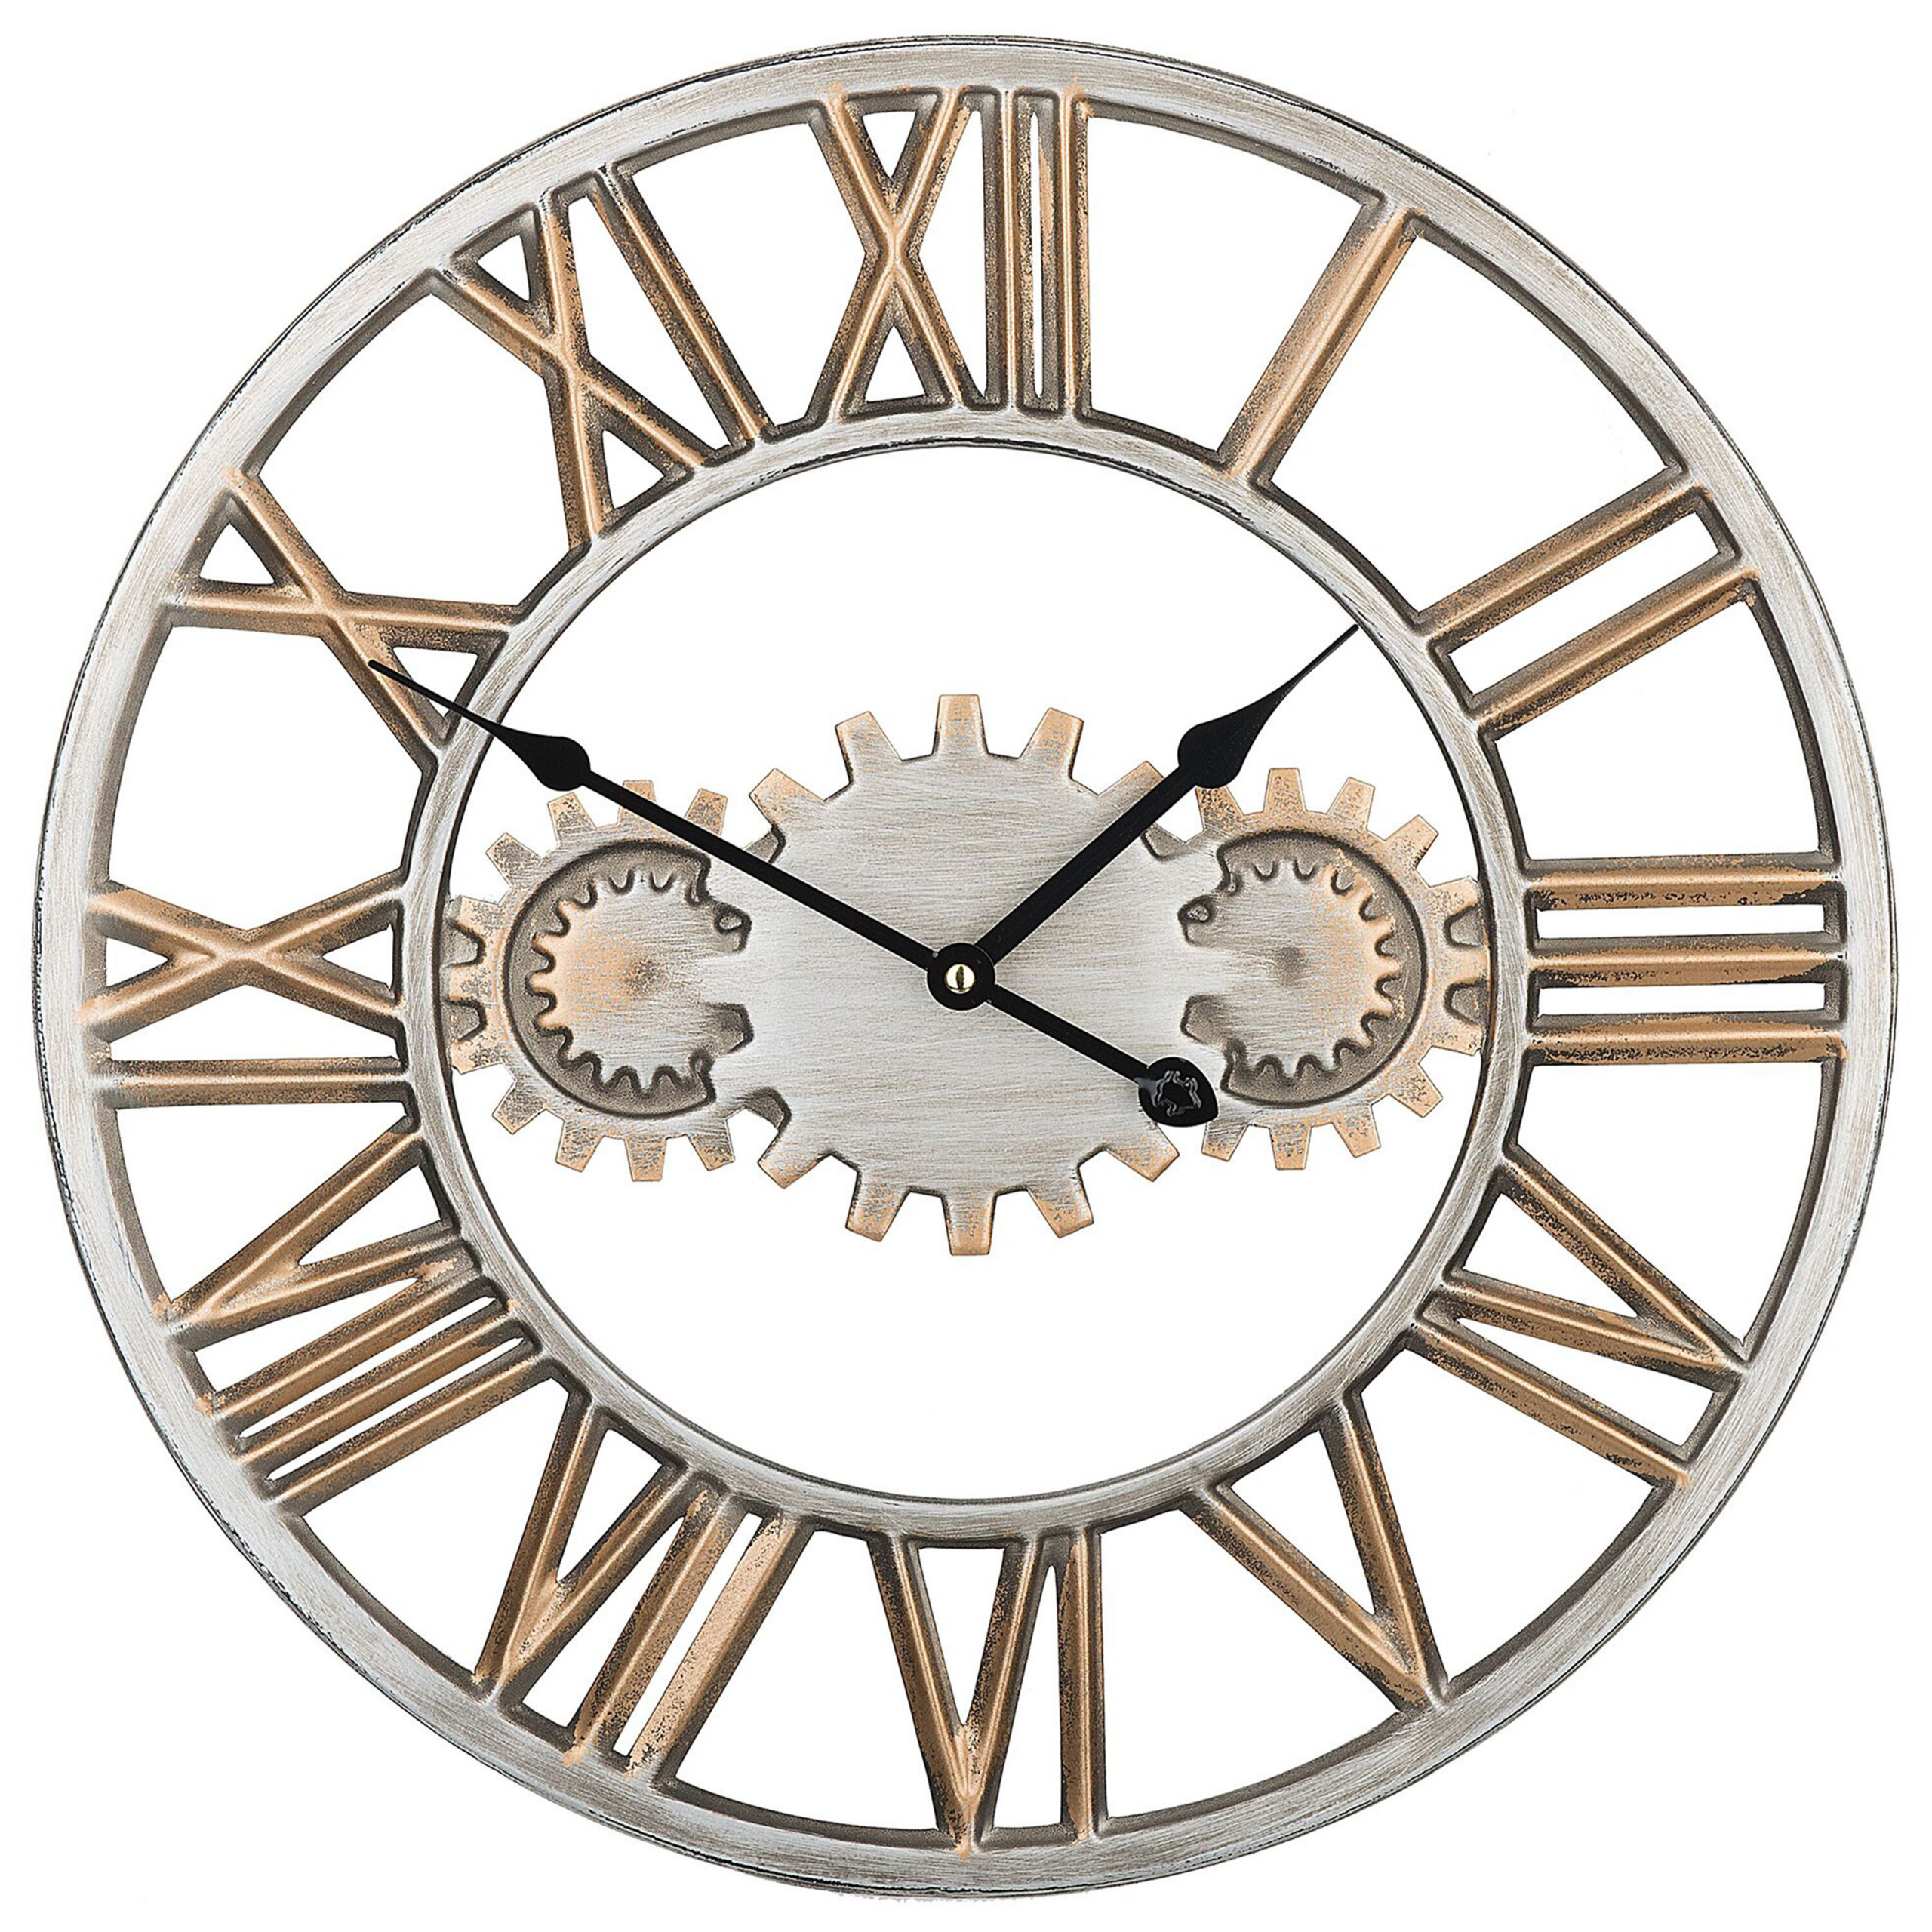 Beliani Wall Clock Silver Distressed Iron Frame Industrial Design Gears Roman Numerals Round 46 cm